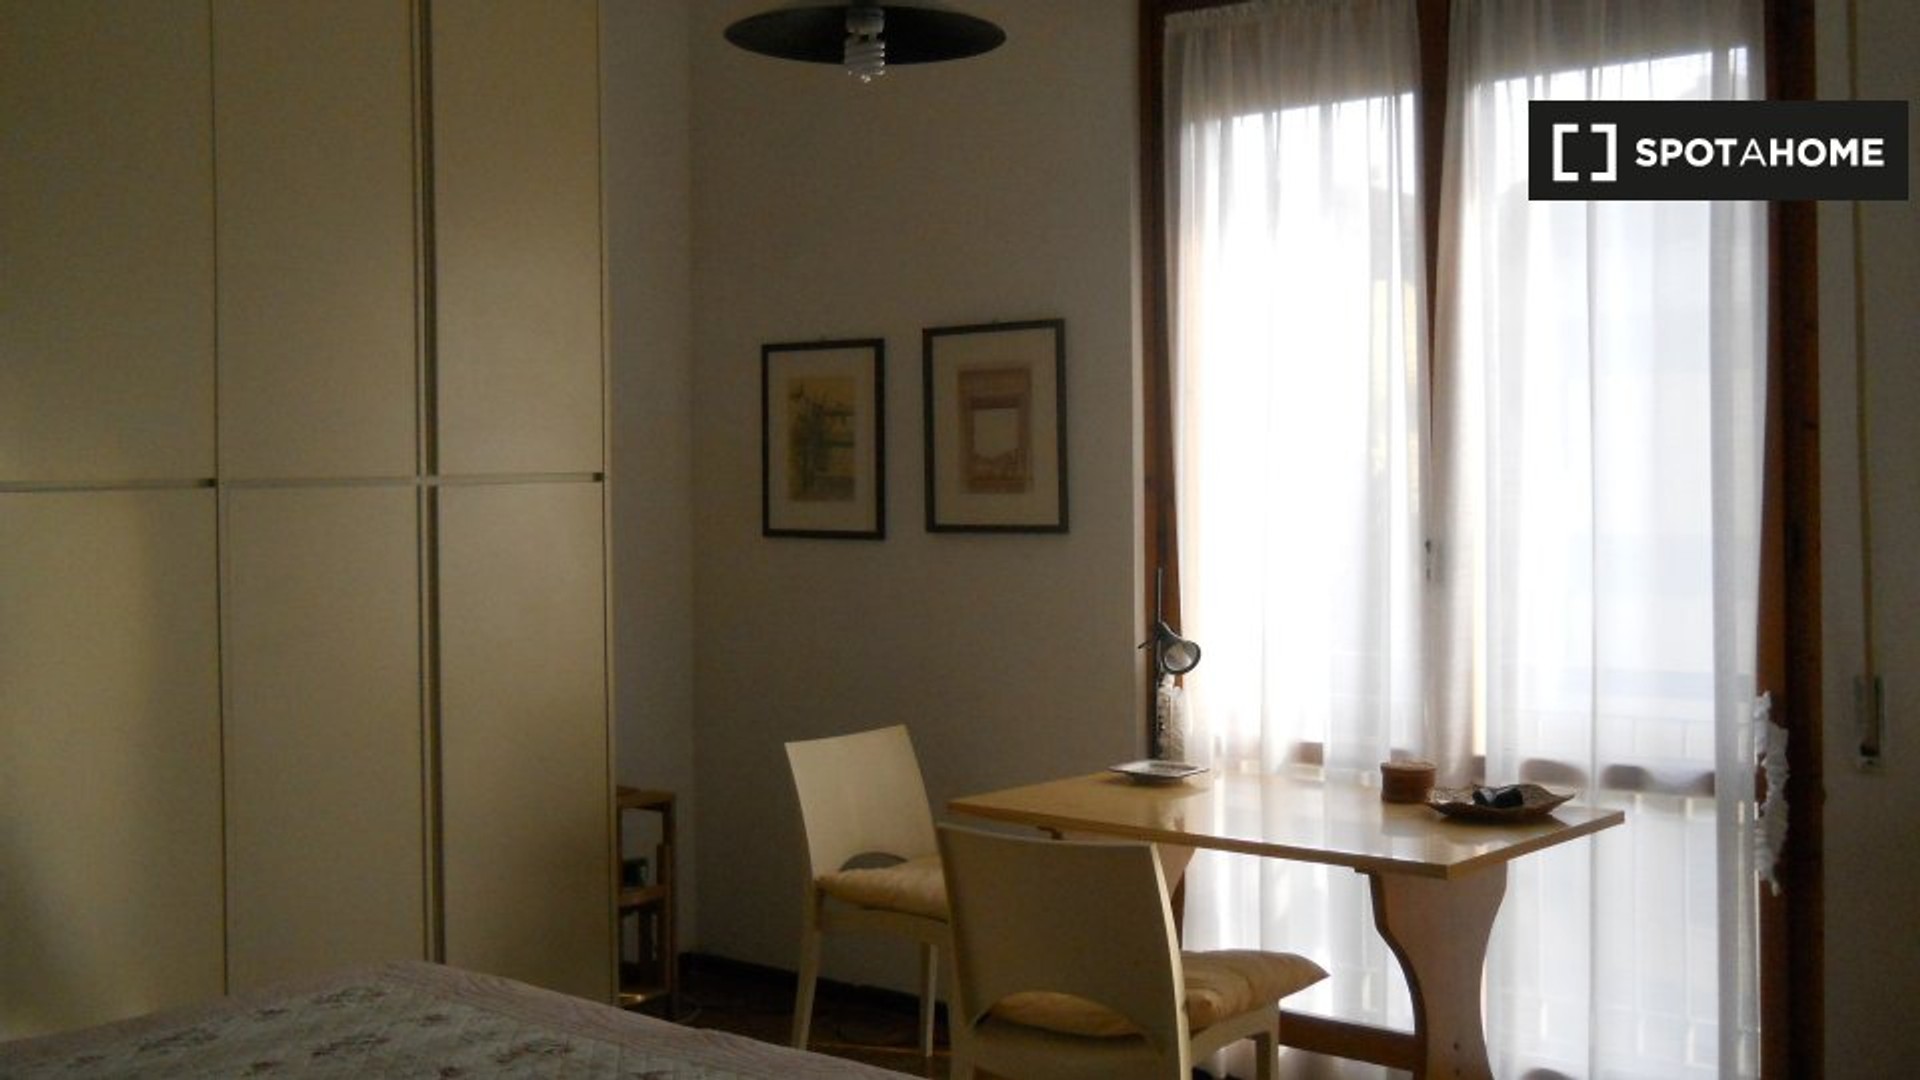 Location mensuelle de chambres à Perugia